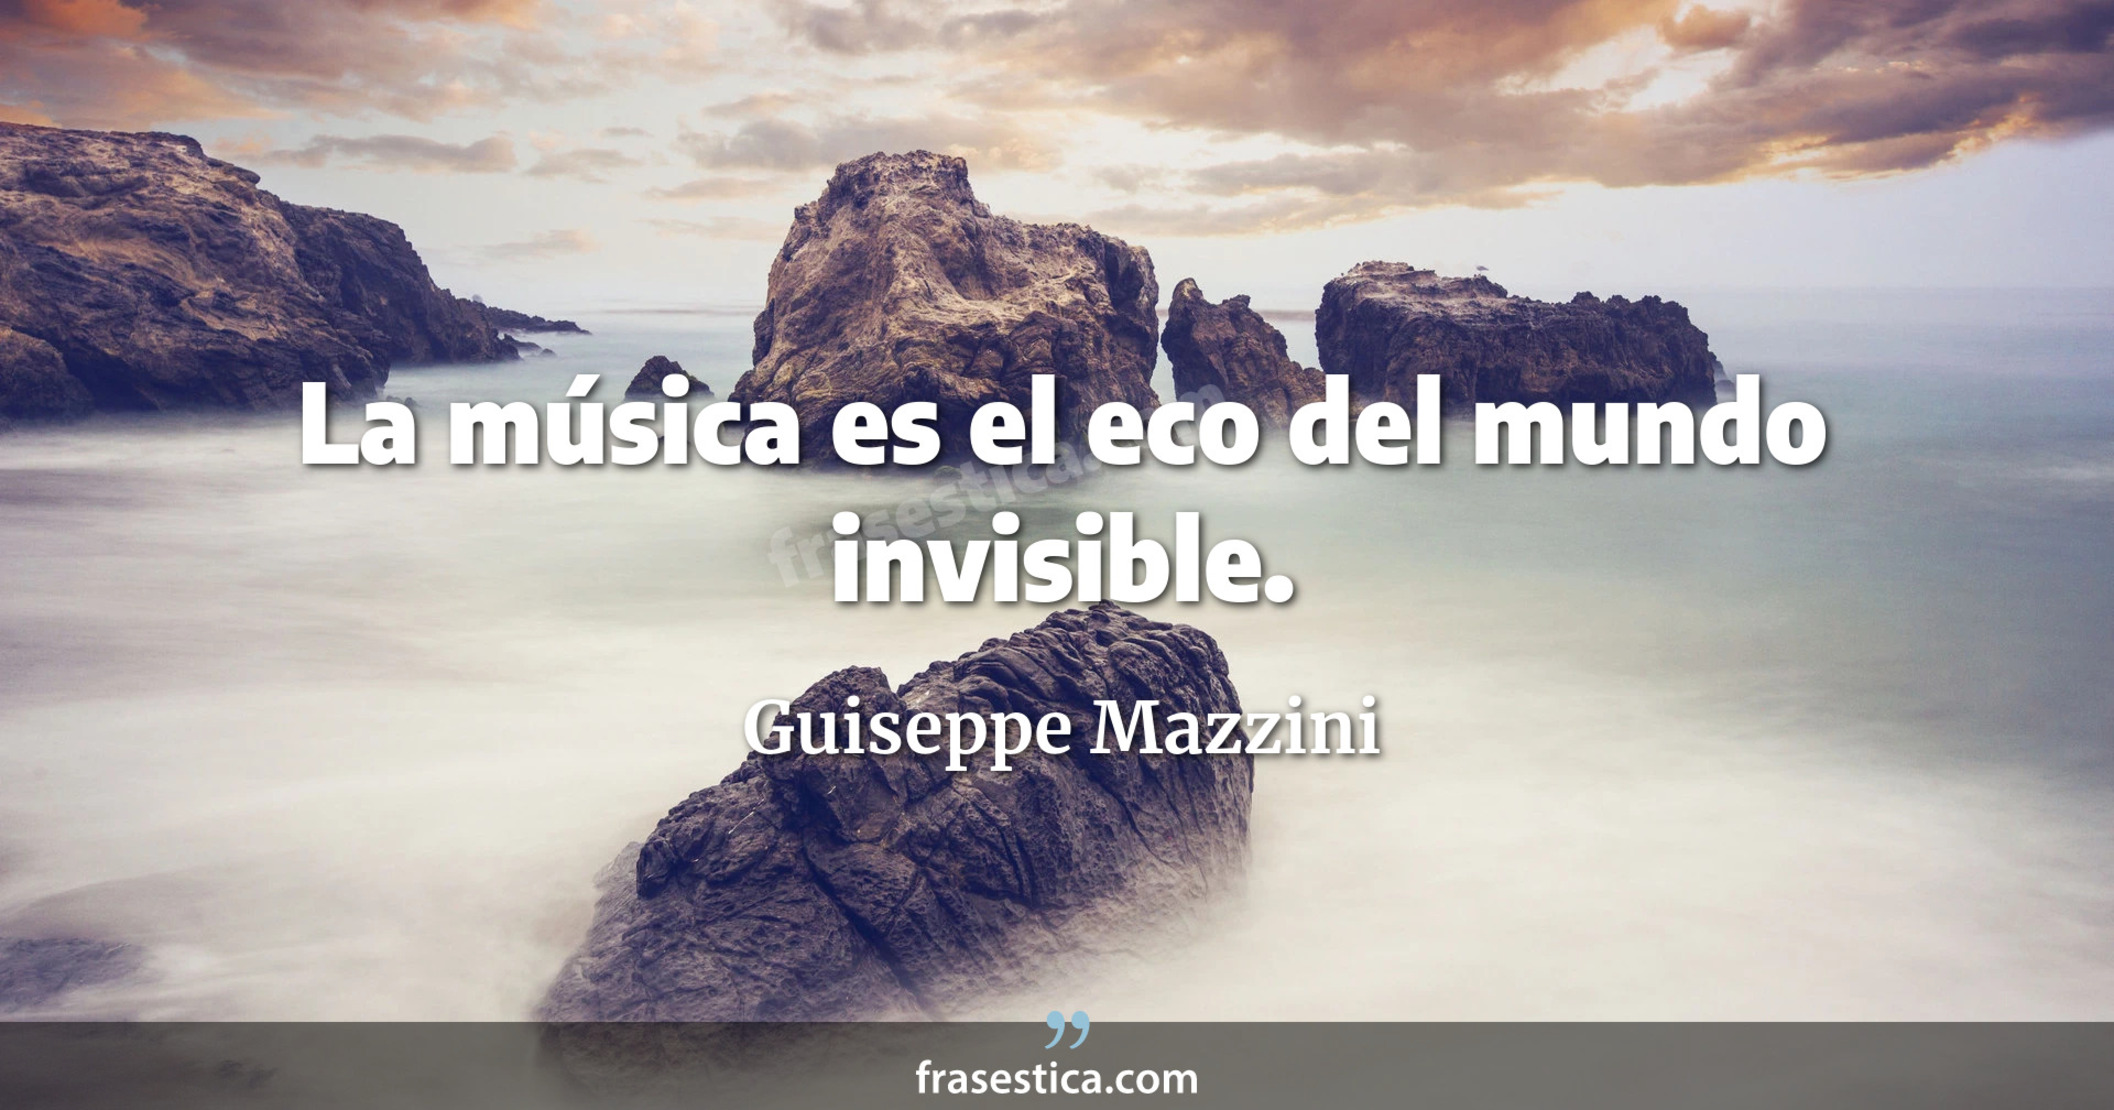 La música es el eco del mundo invisible. - Guiseppe Mazzini